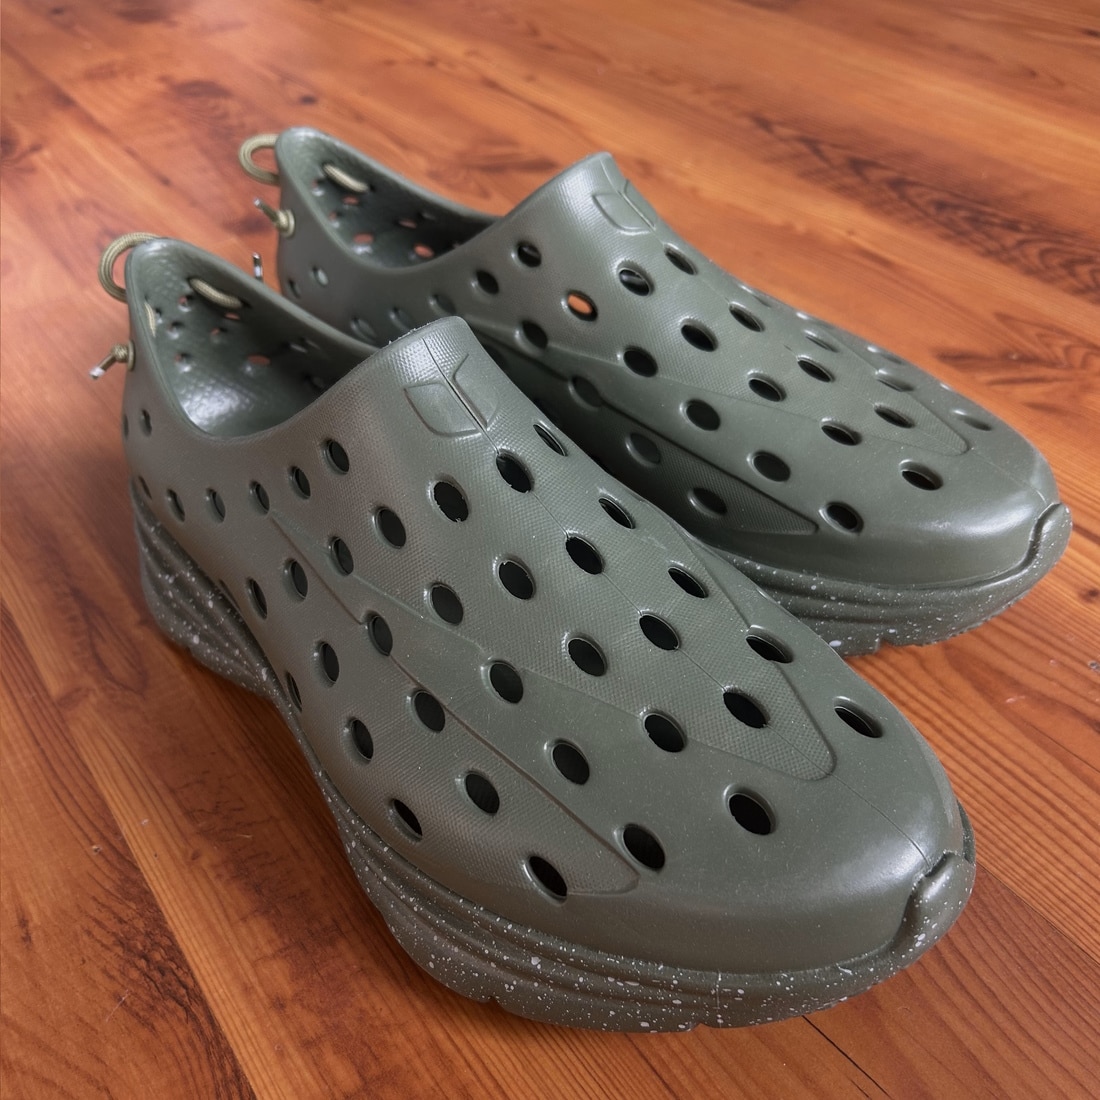 NEW* CROC BUCKLES!!!Tutorial, Croc designs